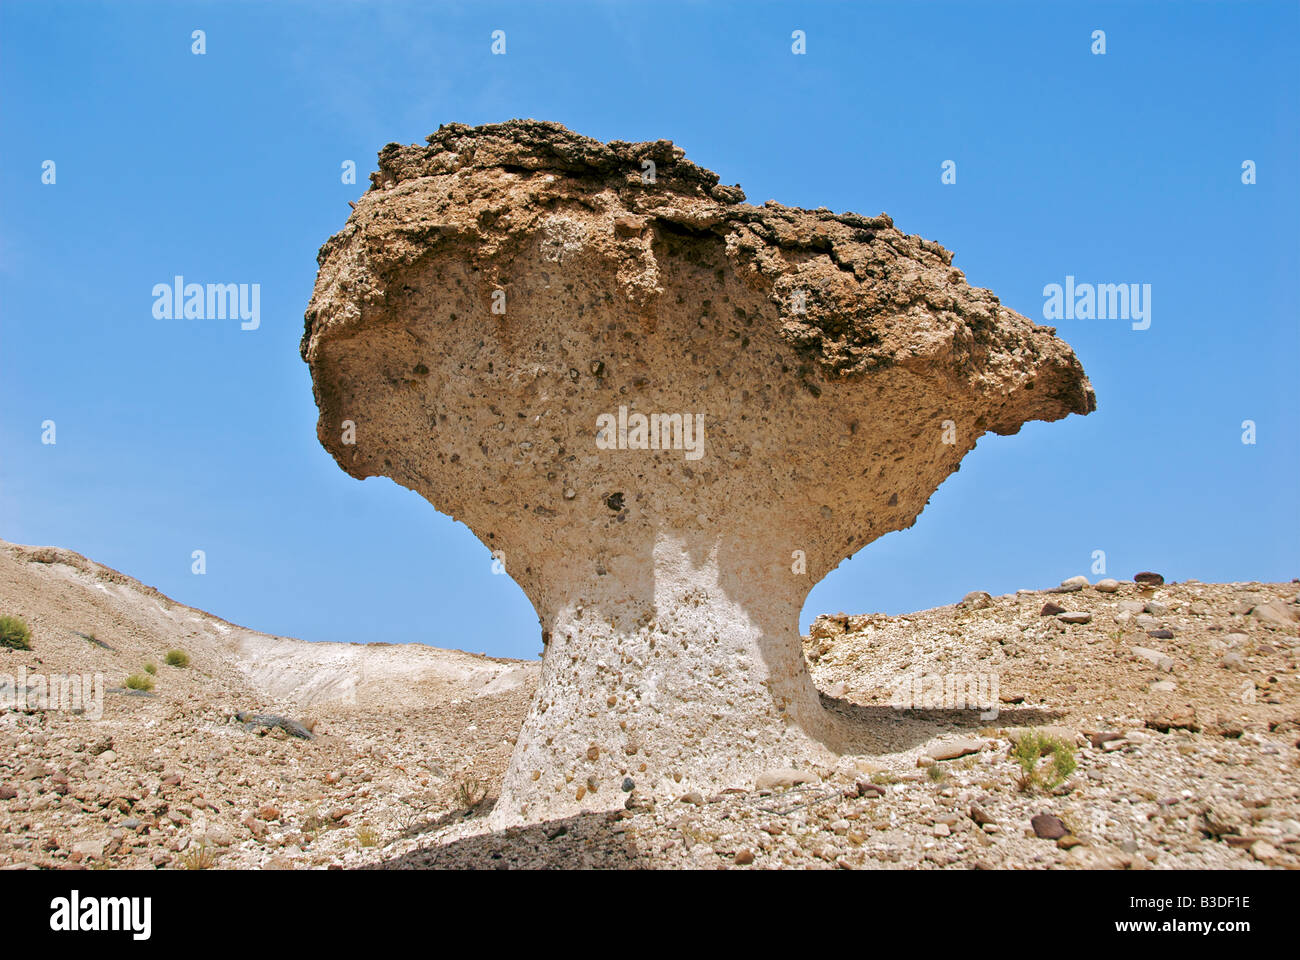 Desert mushrooms or sandstone geological formation Sharqiya Region Sultanate of Oman Stock Photo